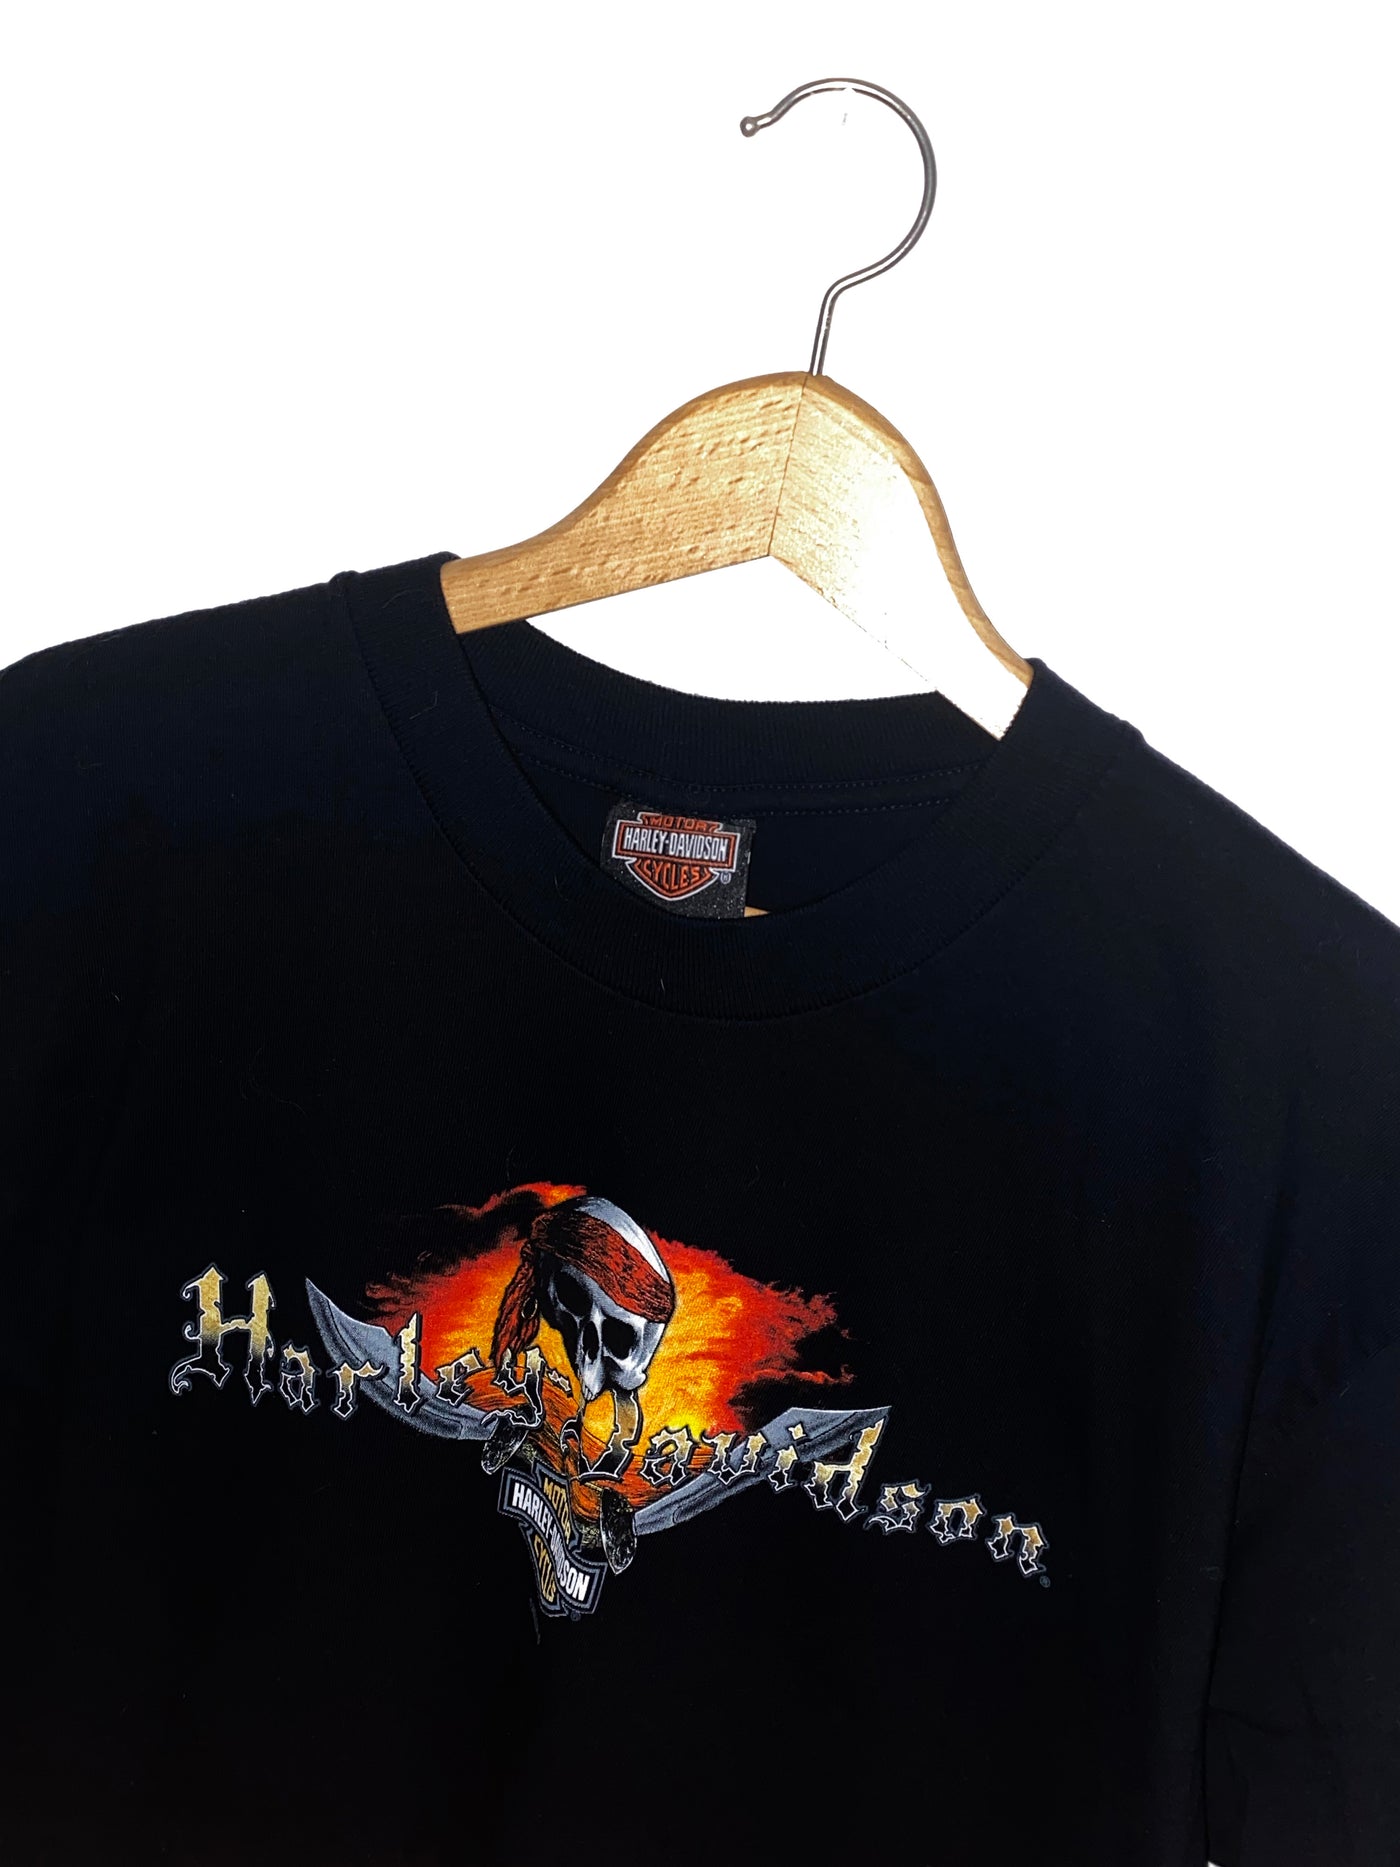 2008 Harley Davidson Grand Caymans Pirate T-Shirt